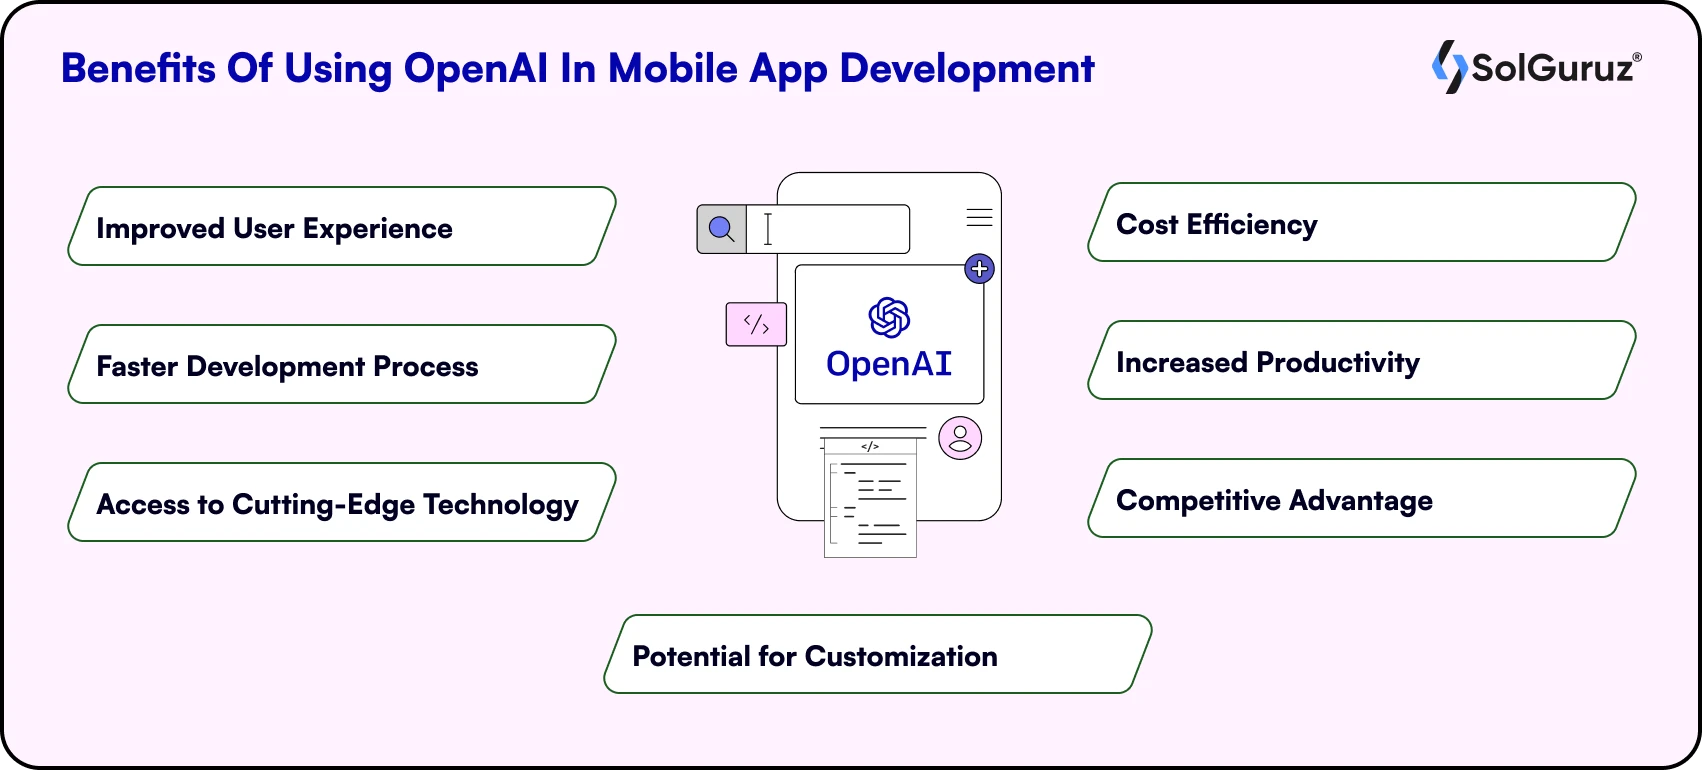 Benefits Of Using OpenAI In Mobile App Development